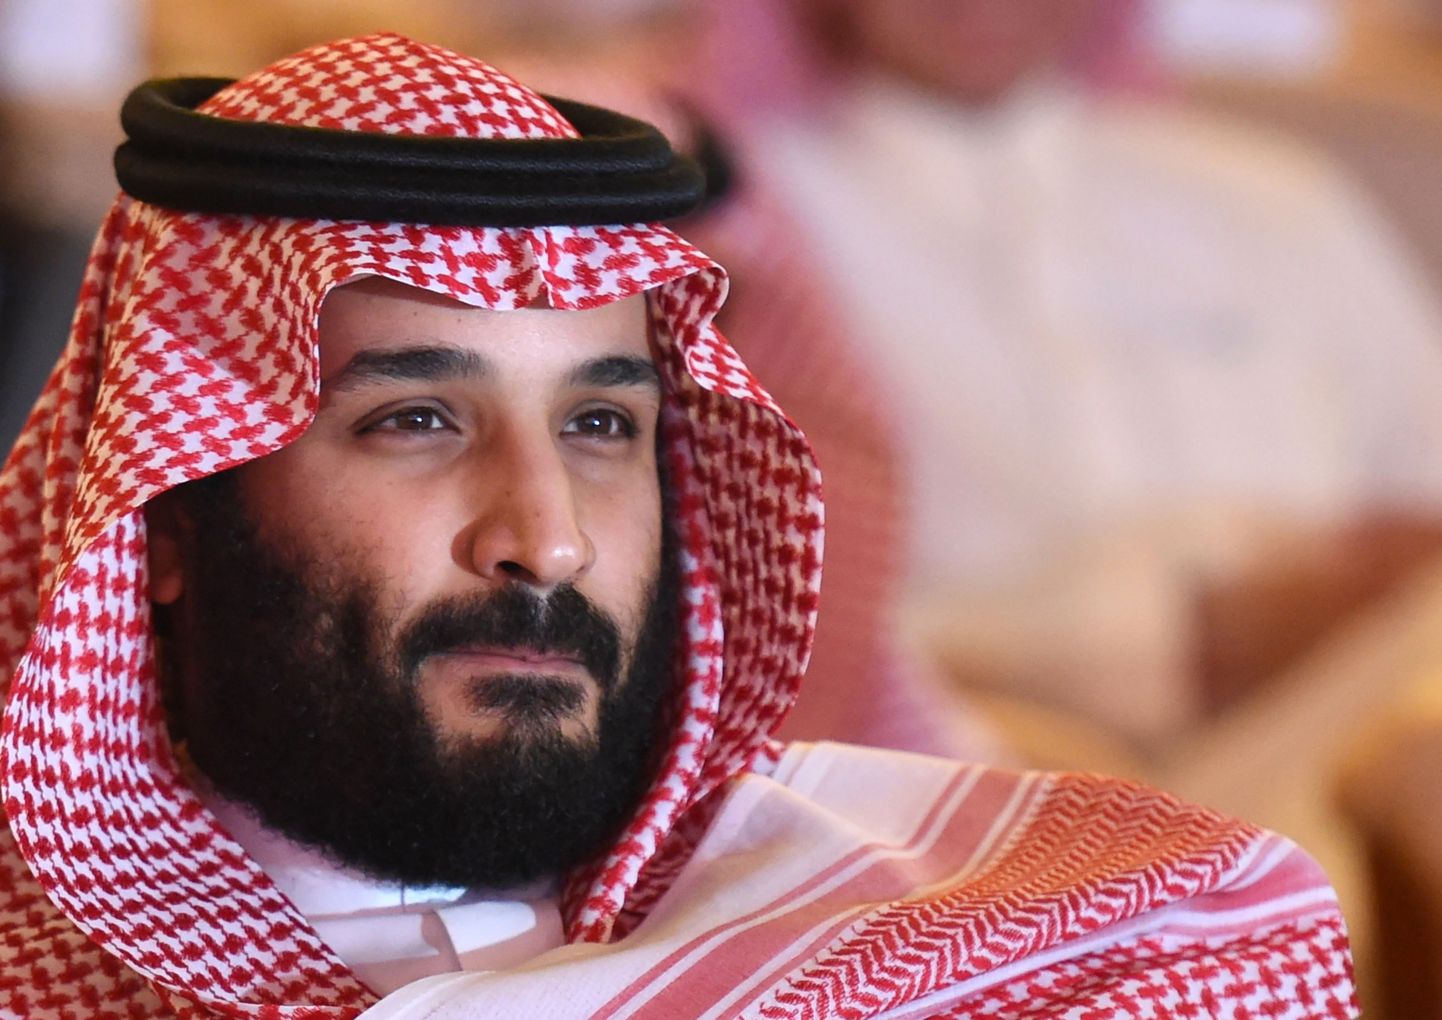 Saudi Araabia kroonprints Mohammed bin Salman